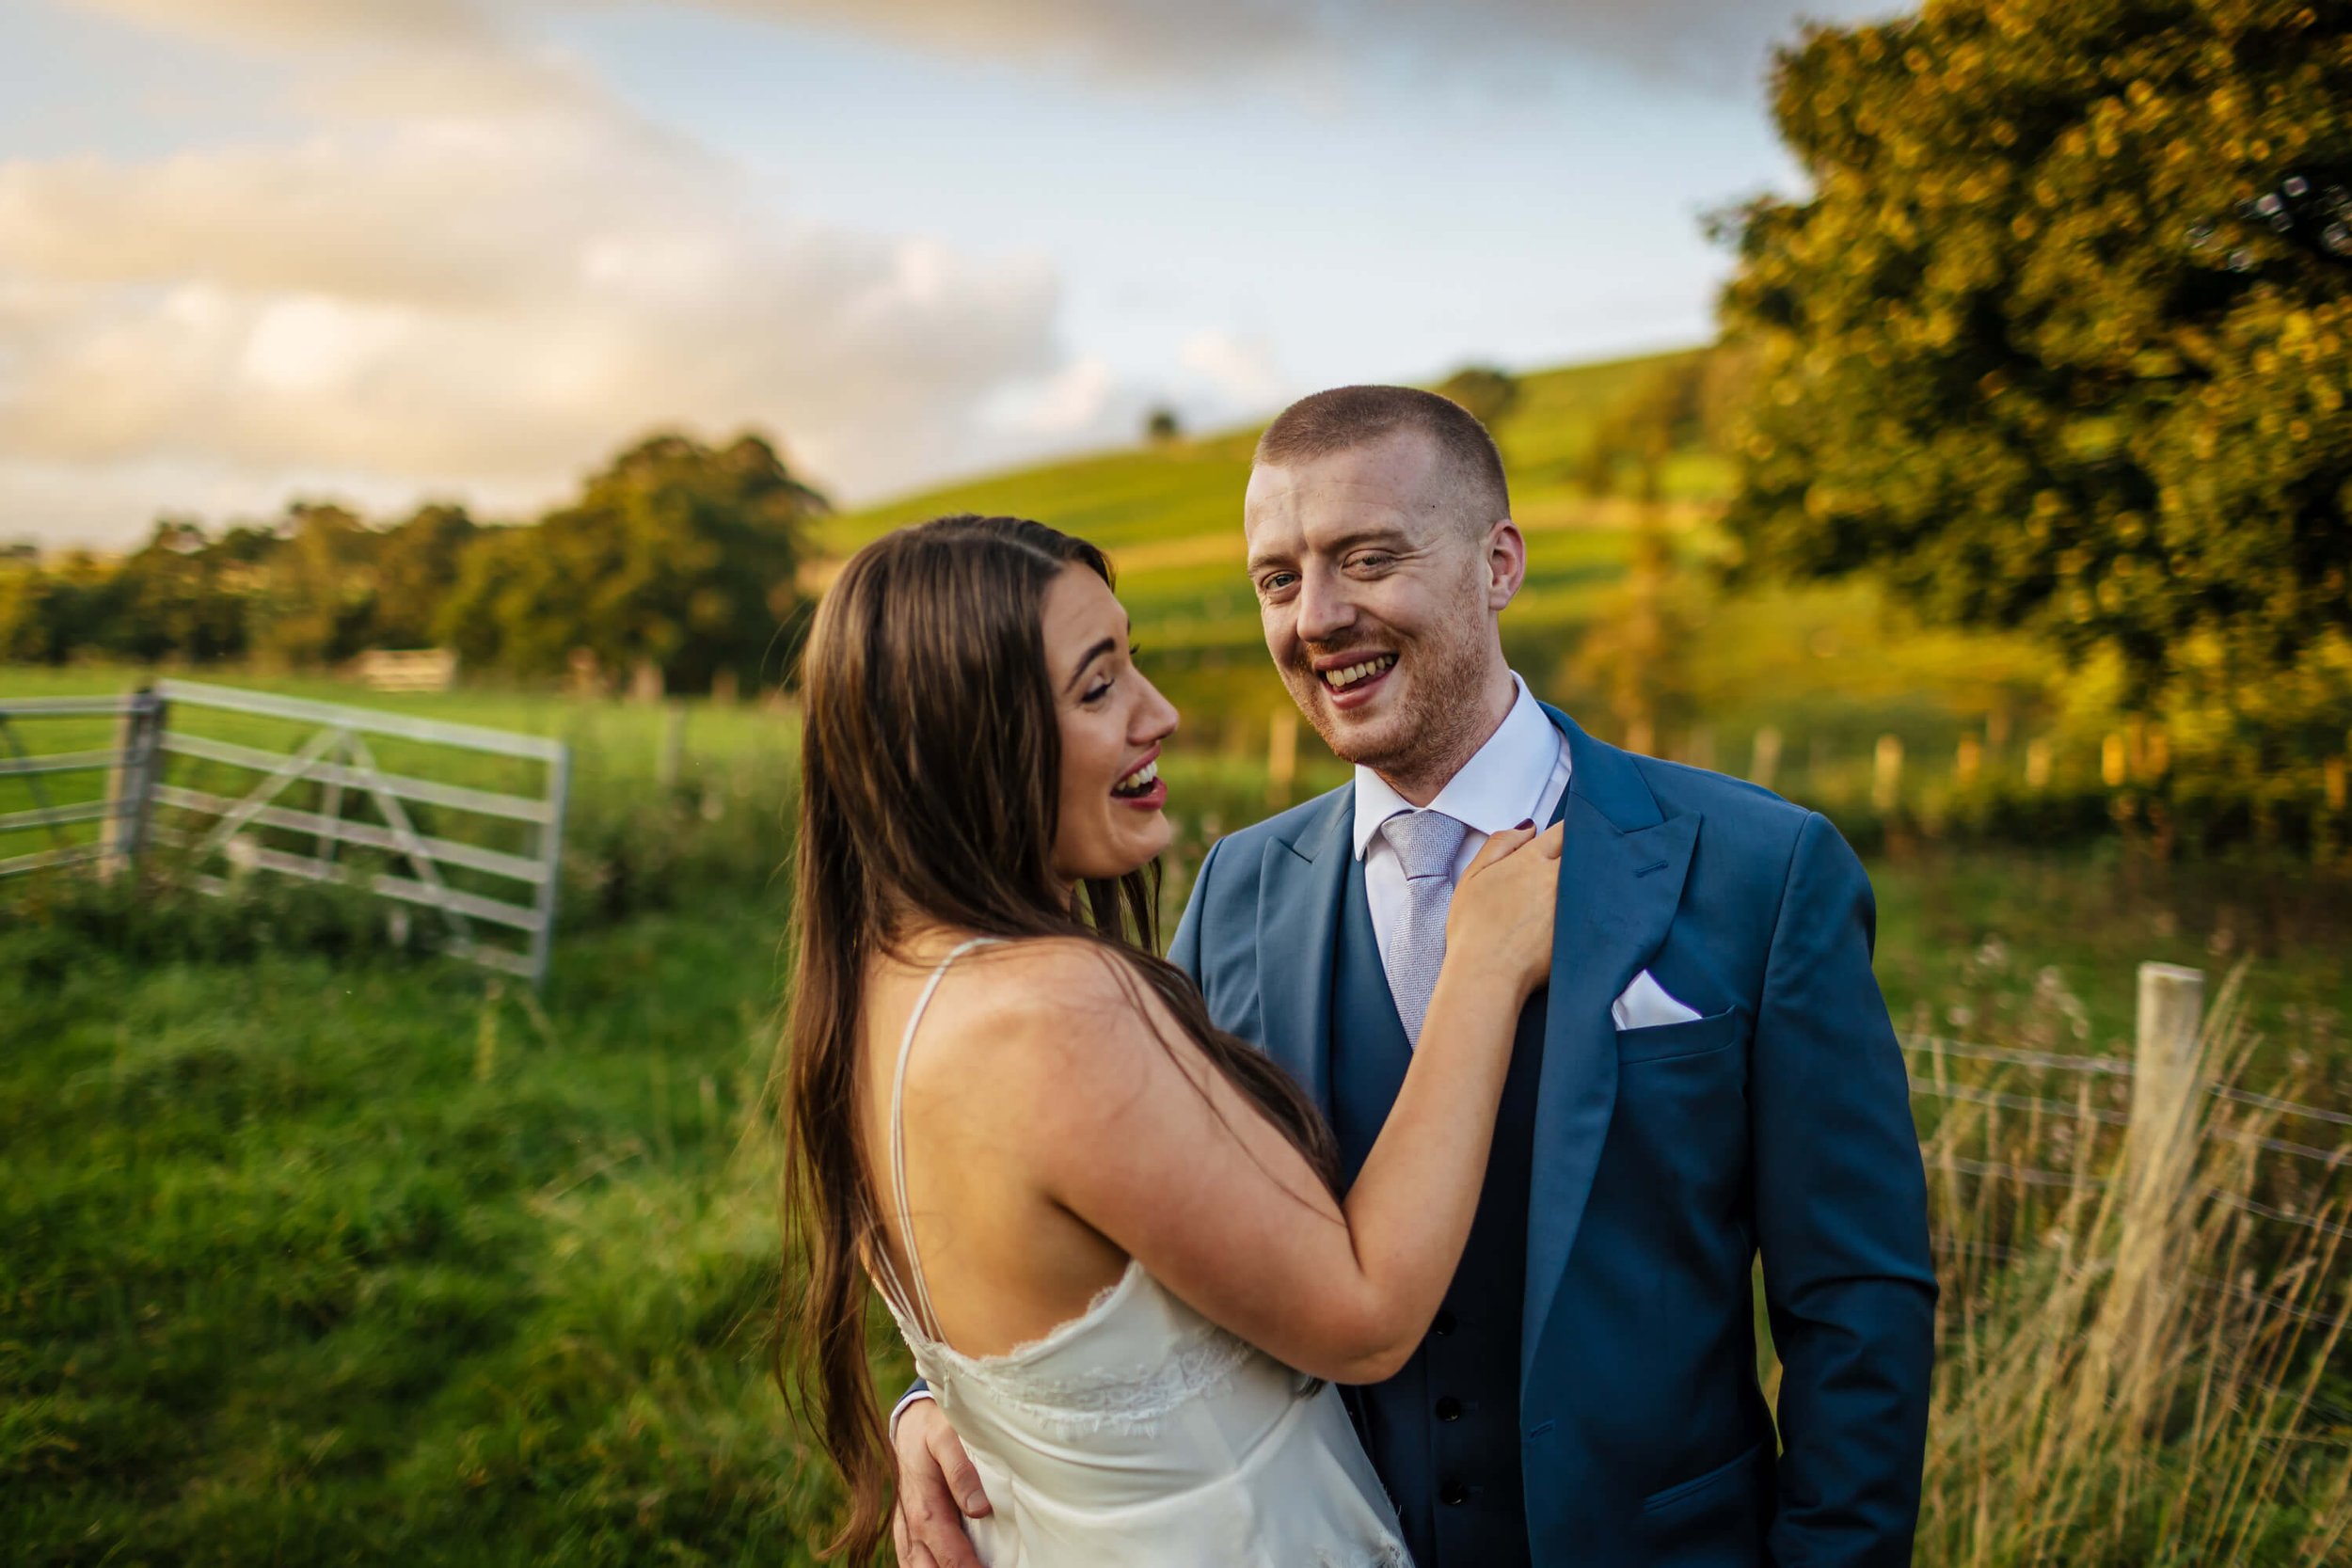 Yorkshire Dales wedding portrait at sunset